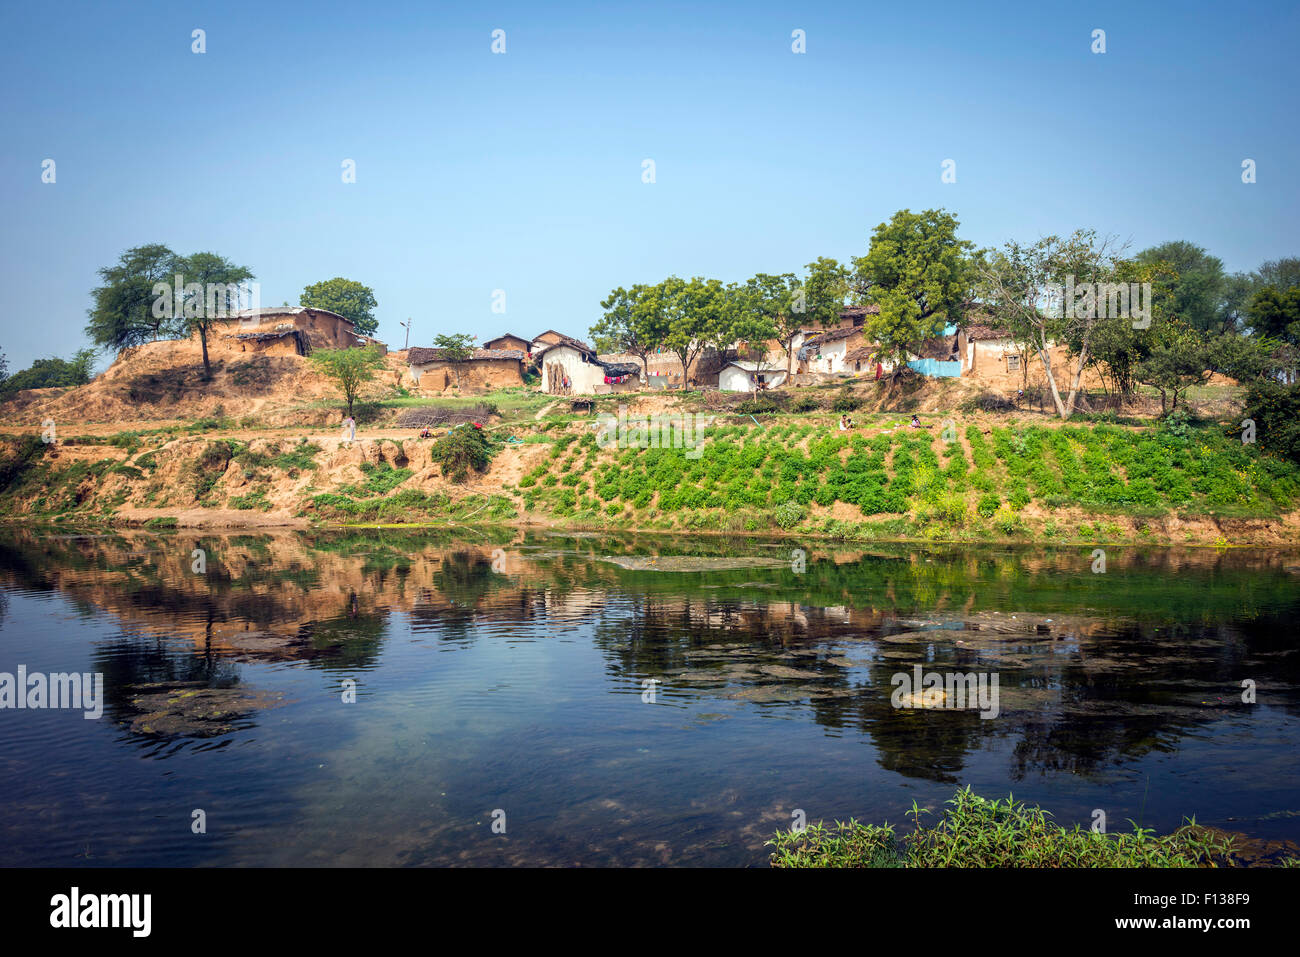 A small rural village on the banks of the Mandakini River near Chitrakoot, (Chitrakut), Madhya Pradesh, India Stock Photo